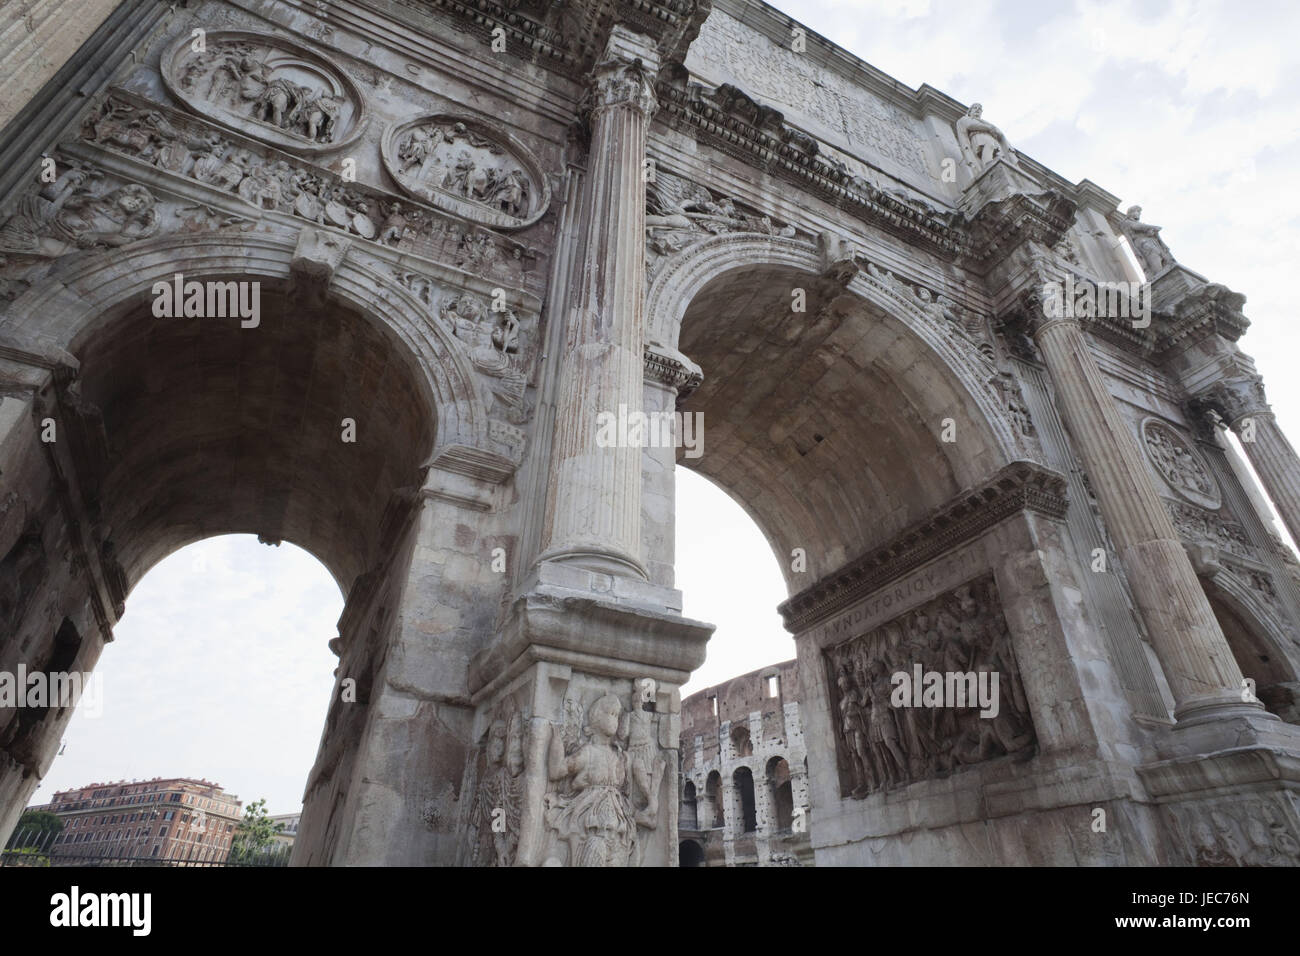 Italy, Rome, Konstantinsbogen and Coliseum, detail, Stock Photo